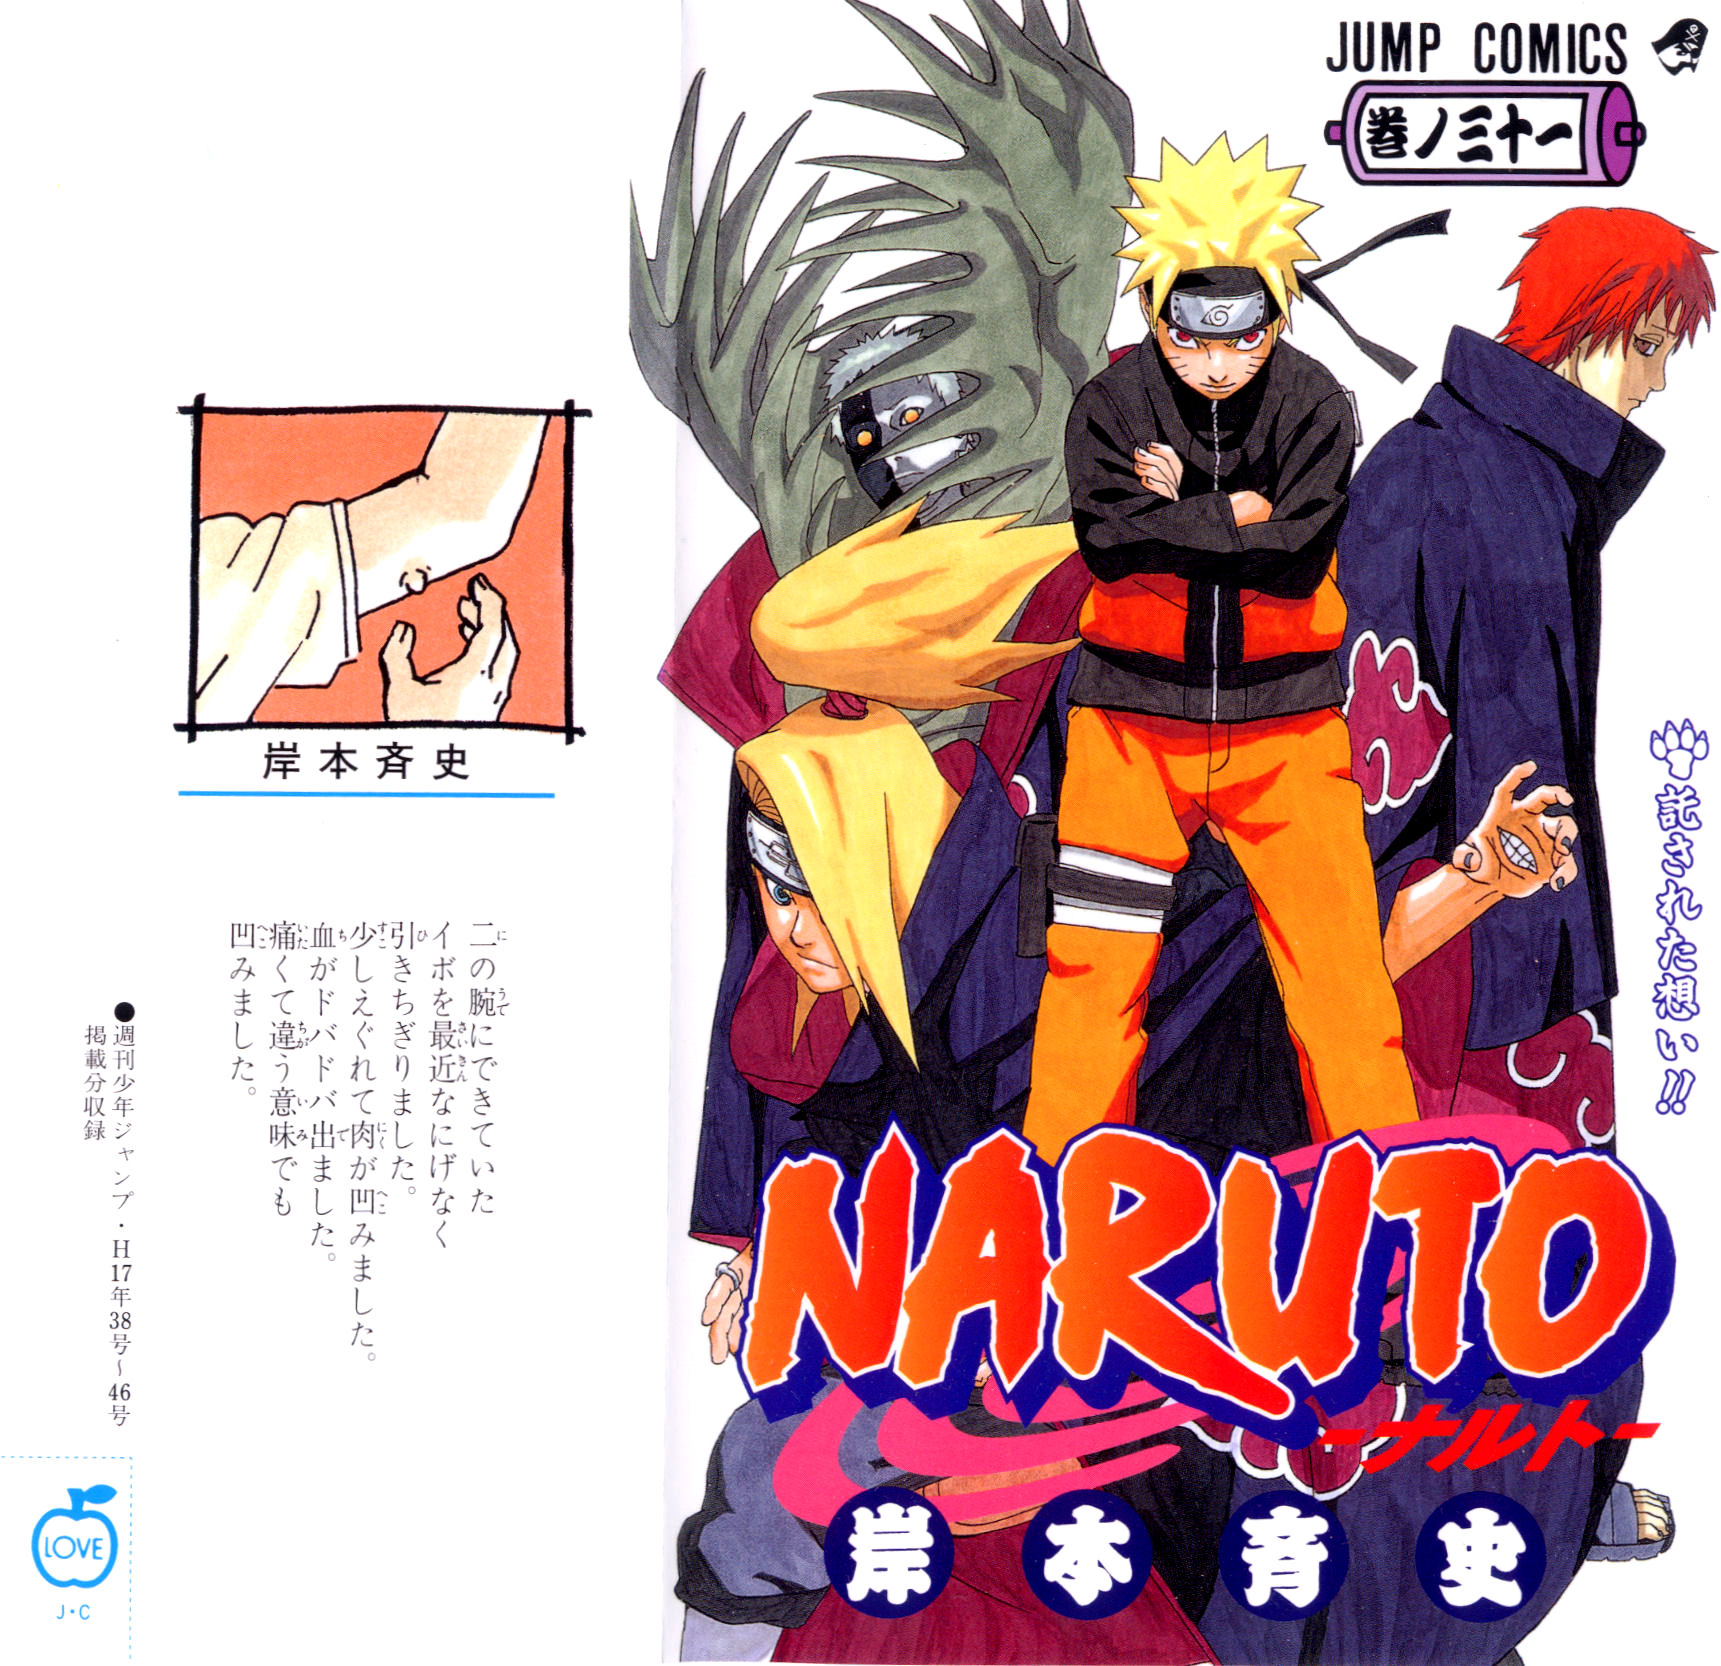 Naruto ナルト 41巻 Manga Townまんがタウン まんがまとめ 無料コミック漫画 ネタバレ